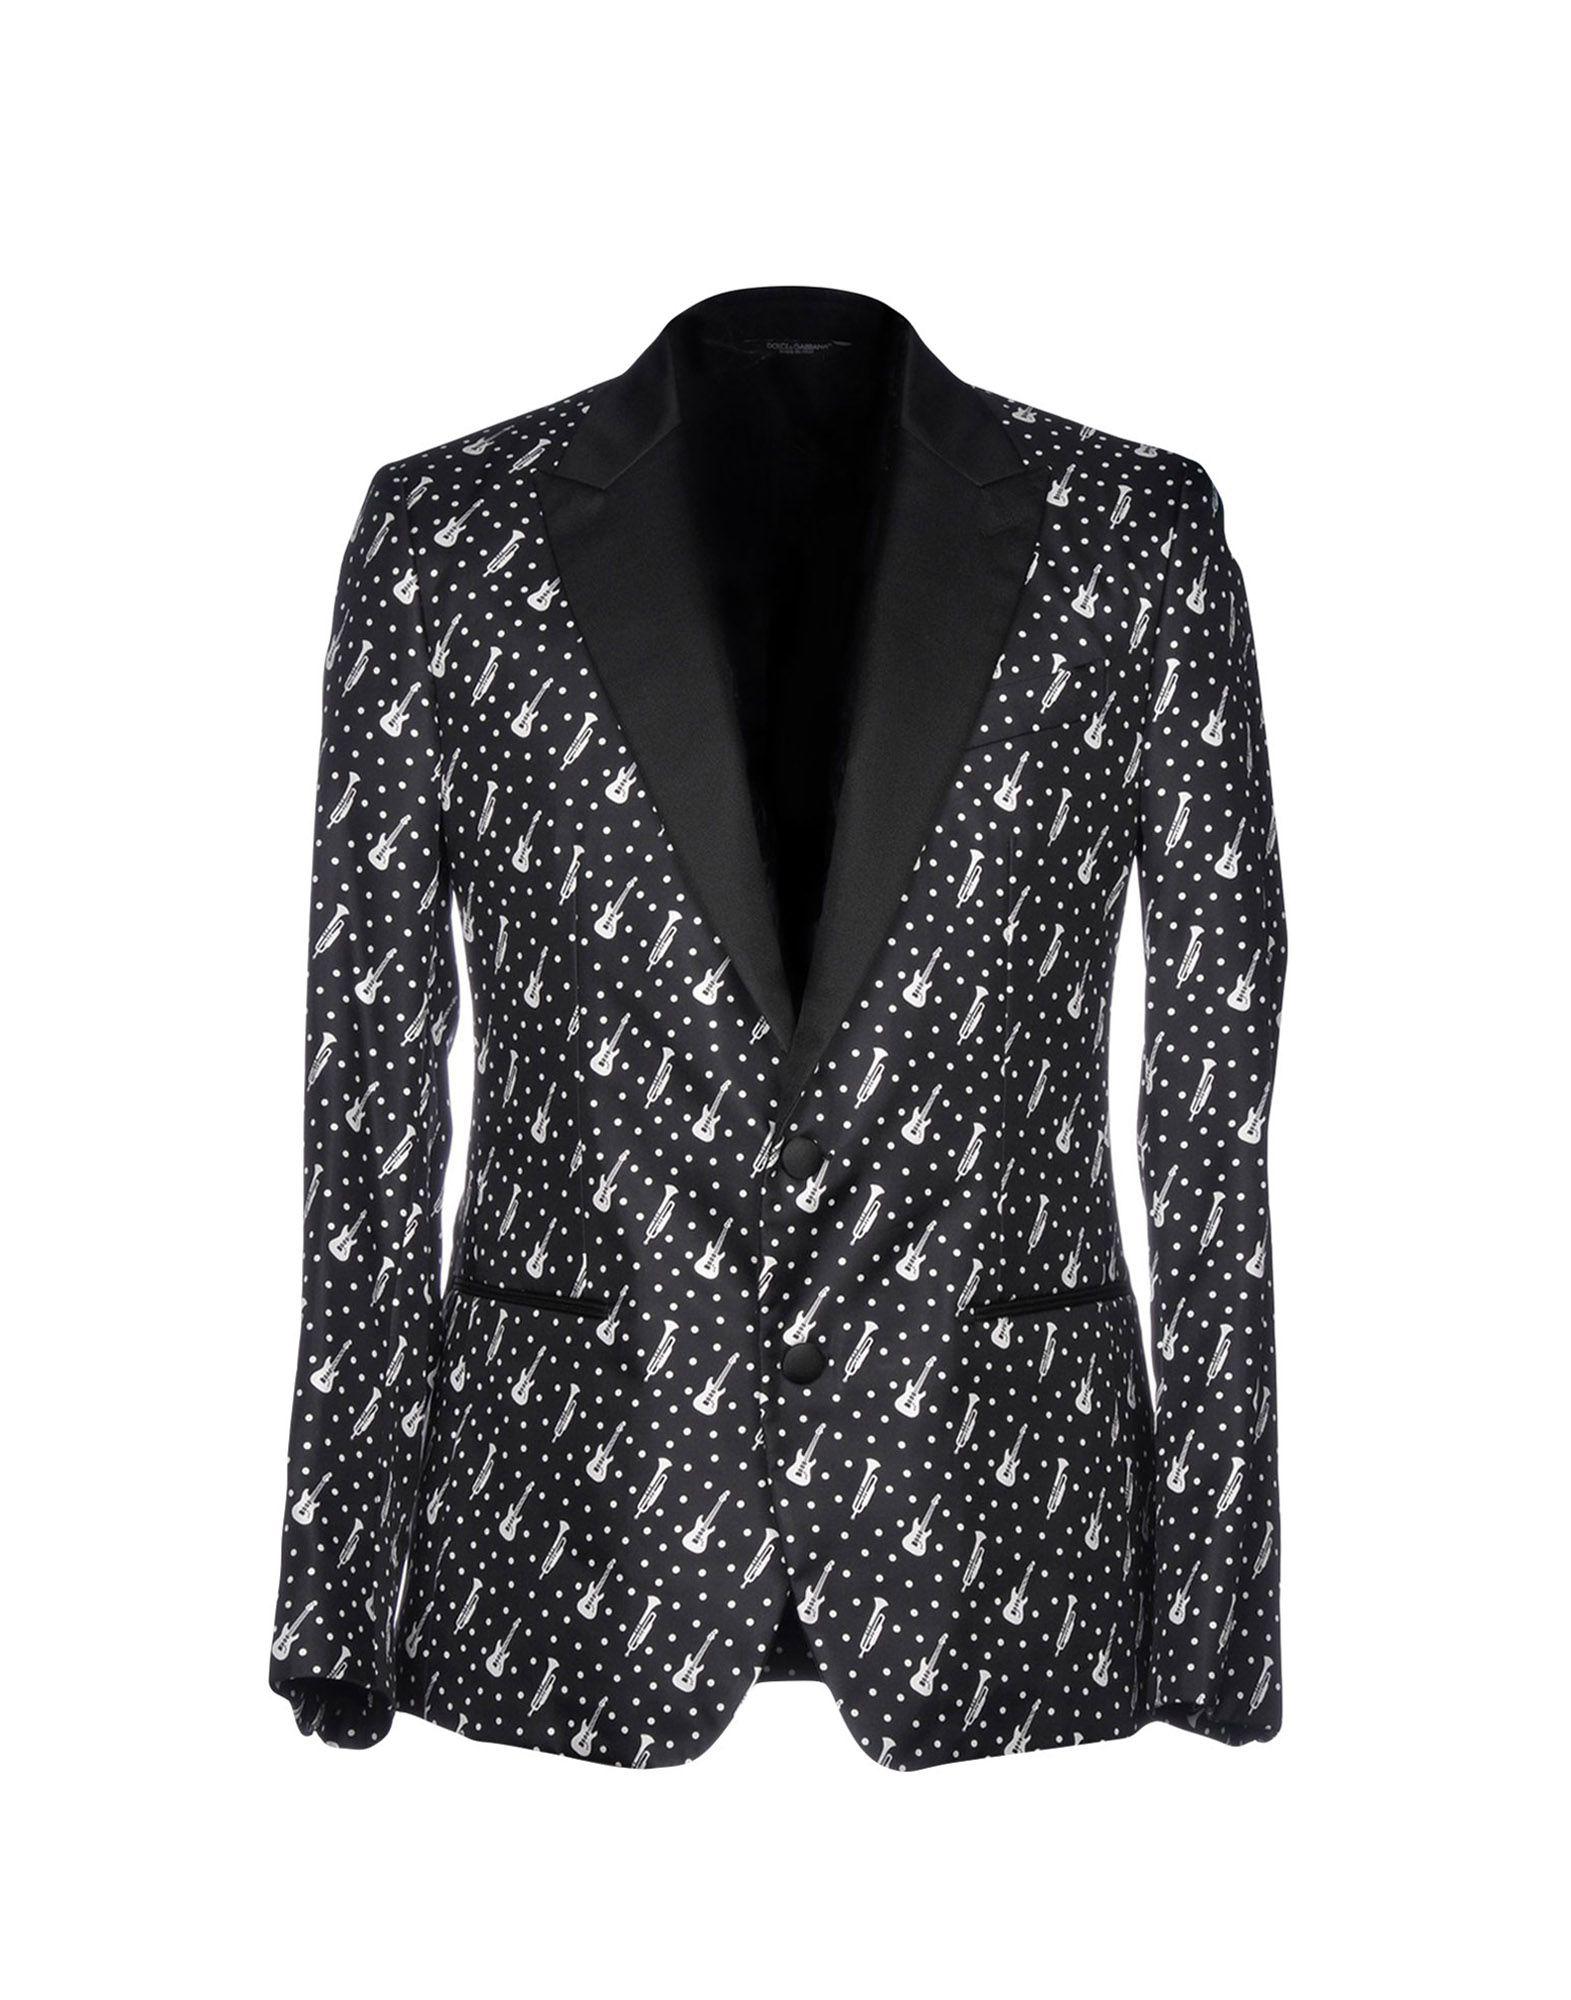 Dolce & Gabbana Satin Blazer in Black for Men - Lyst